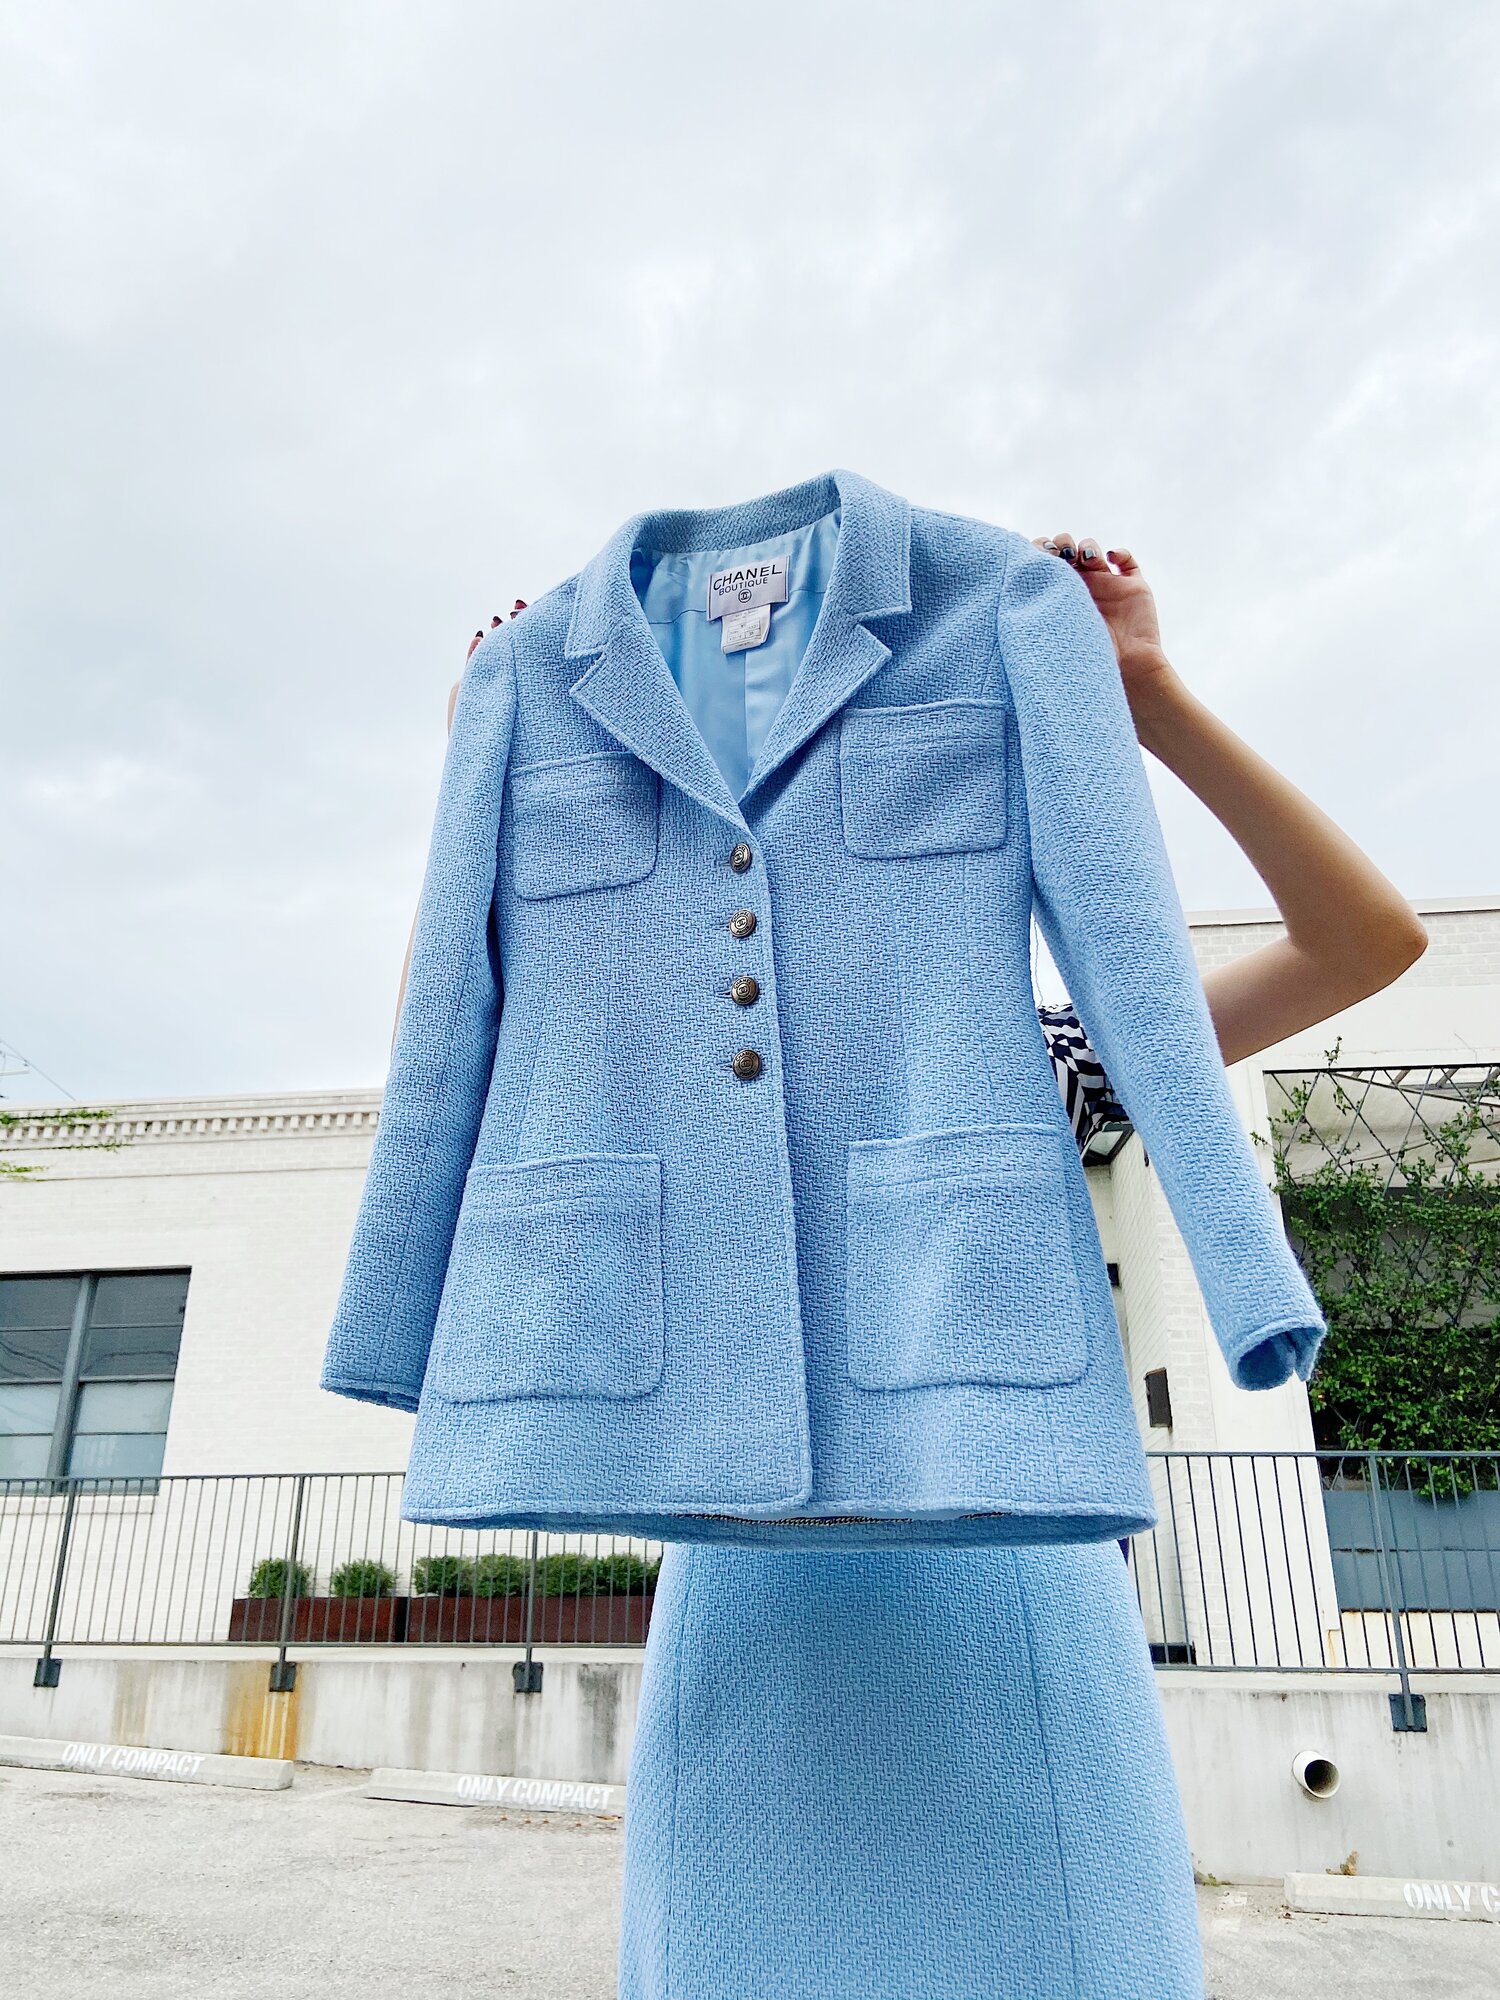 Chanel Vest & Skirt Set — The Posh Pop-Up